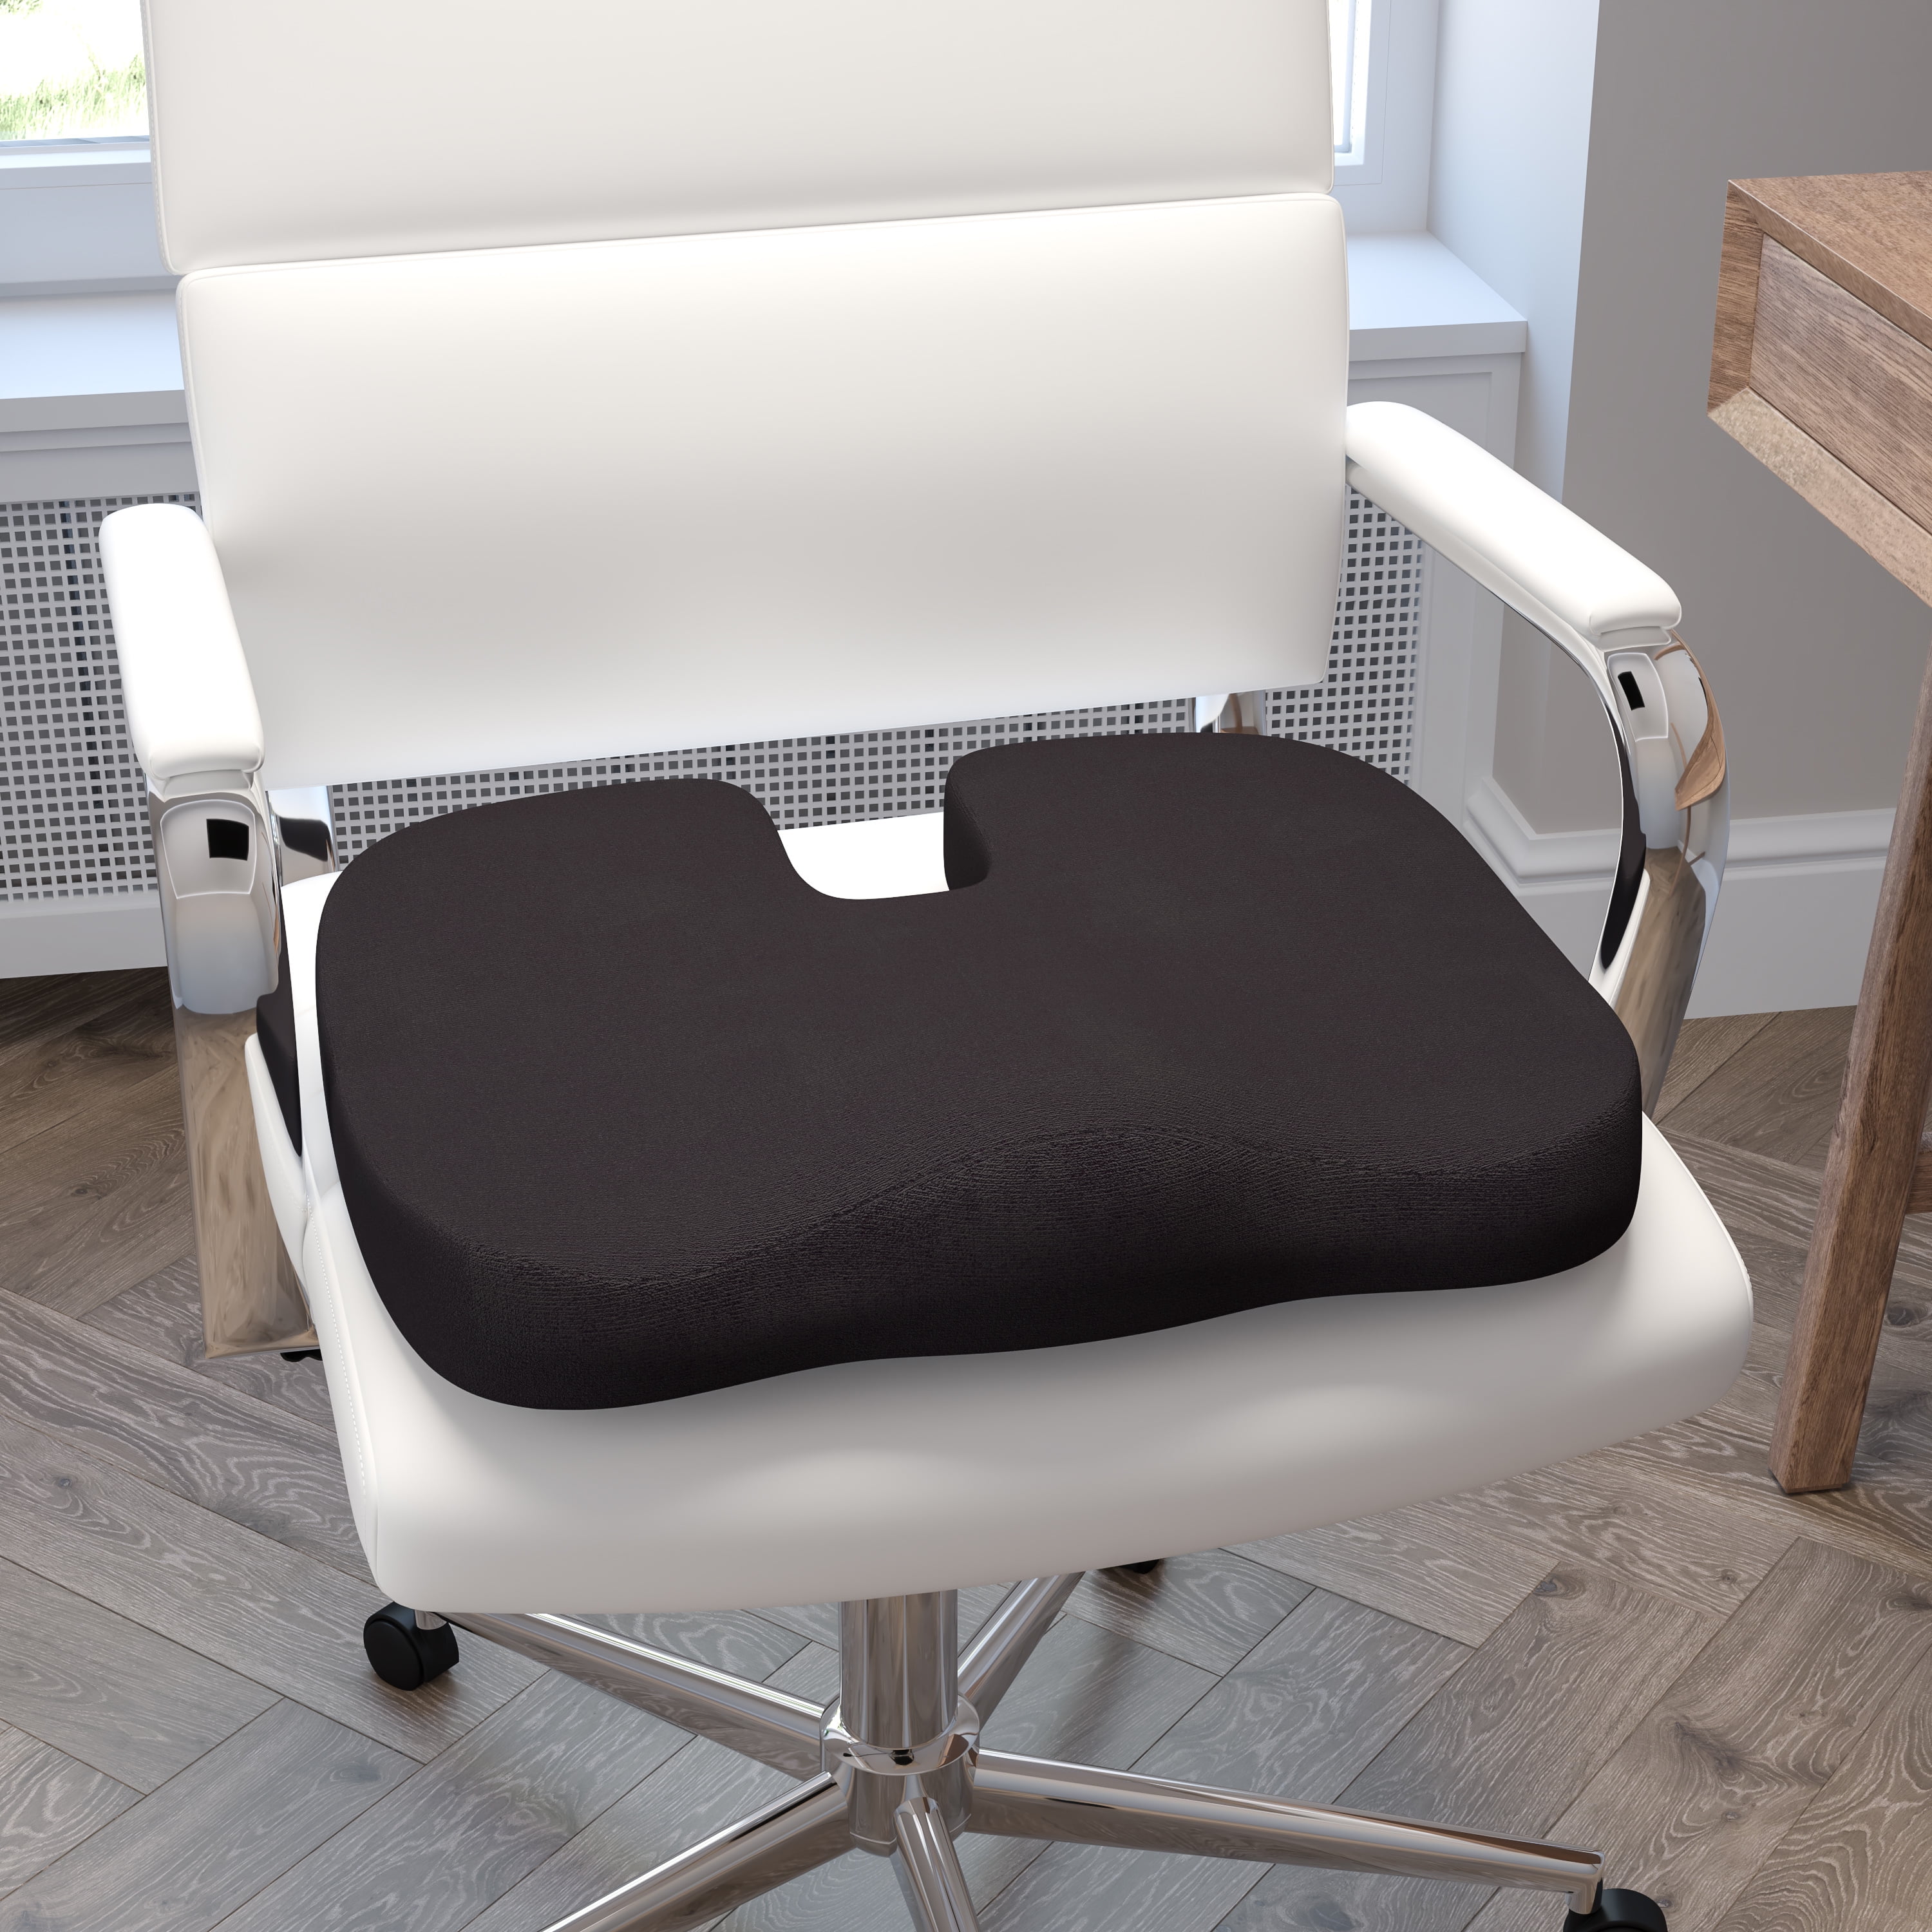 saireider 1 SAIREIDER Seat cushions for Office chairs, Memory Foam